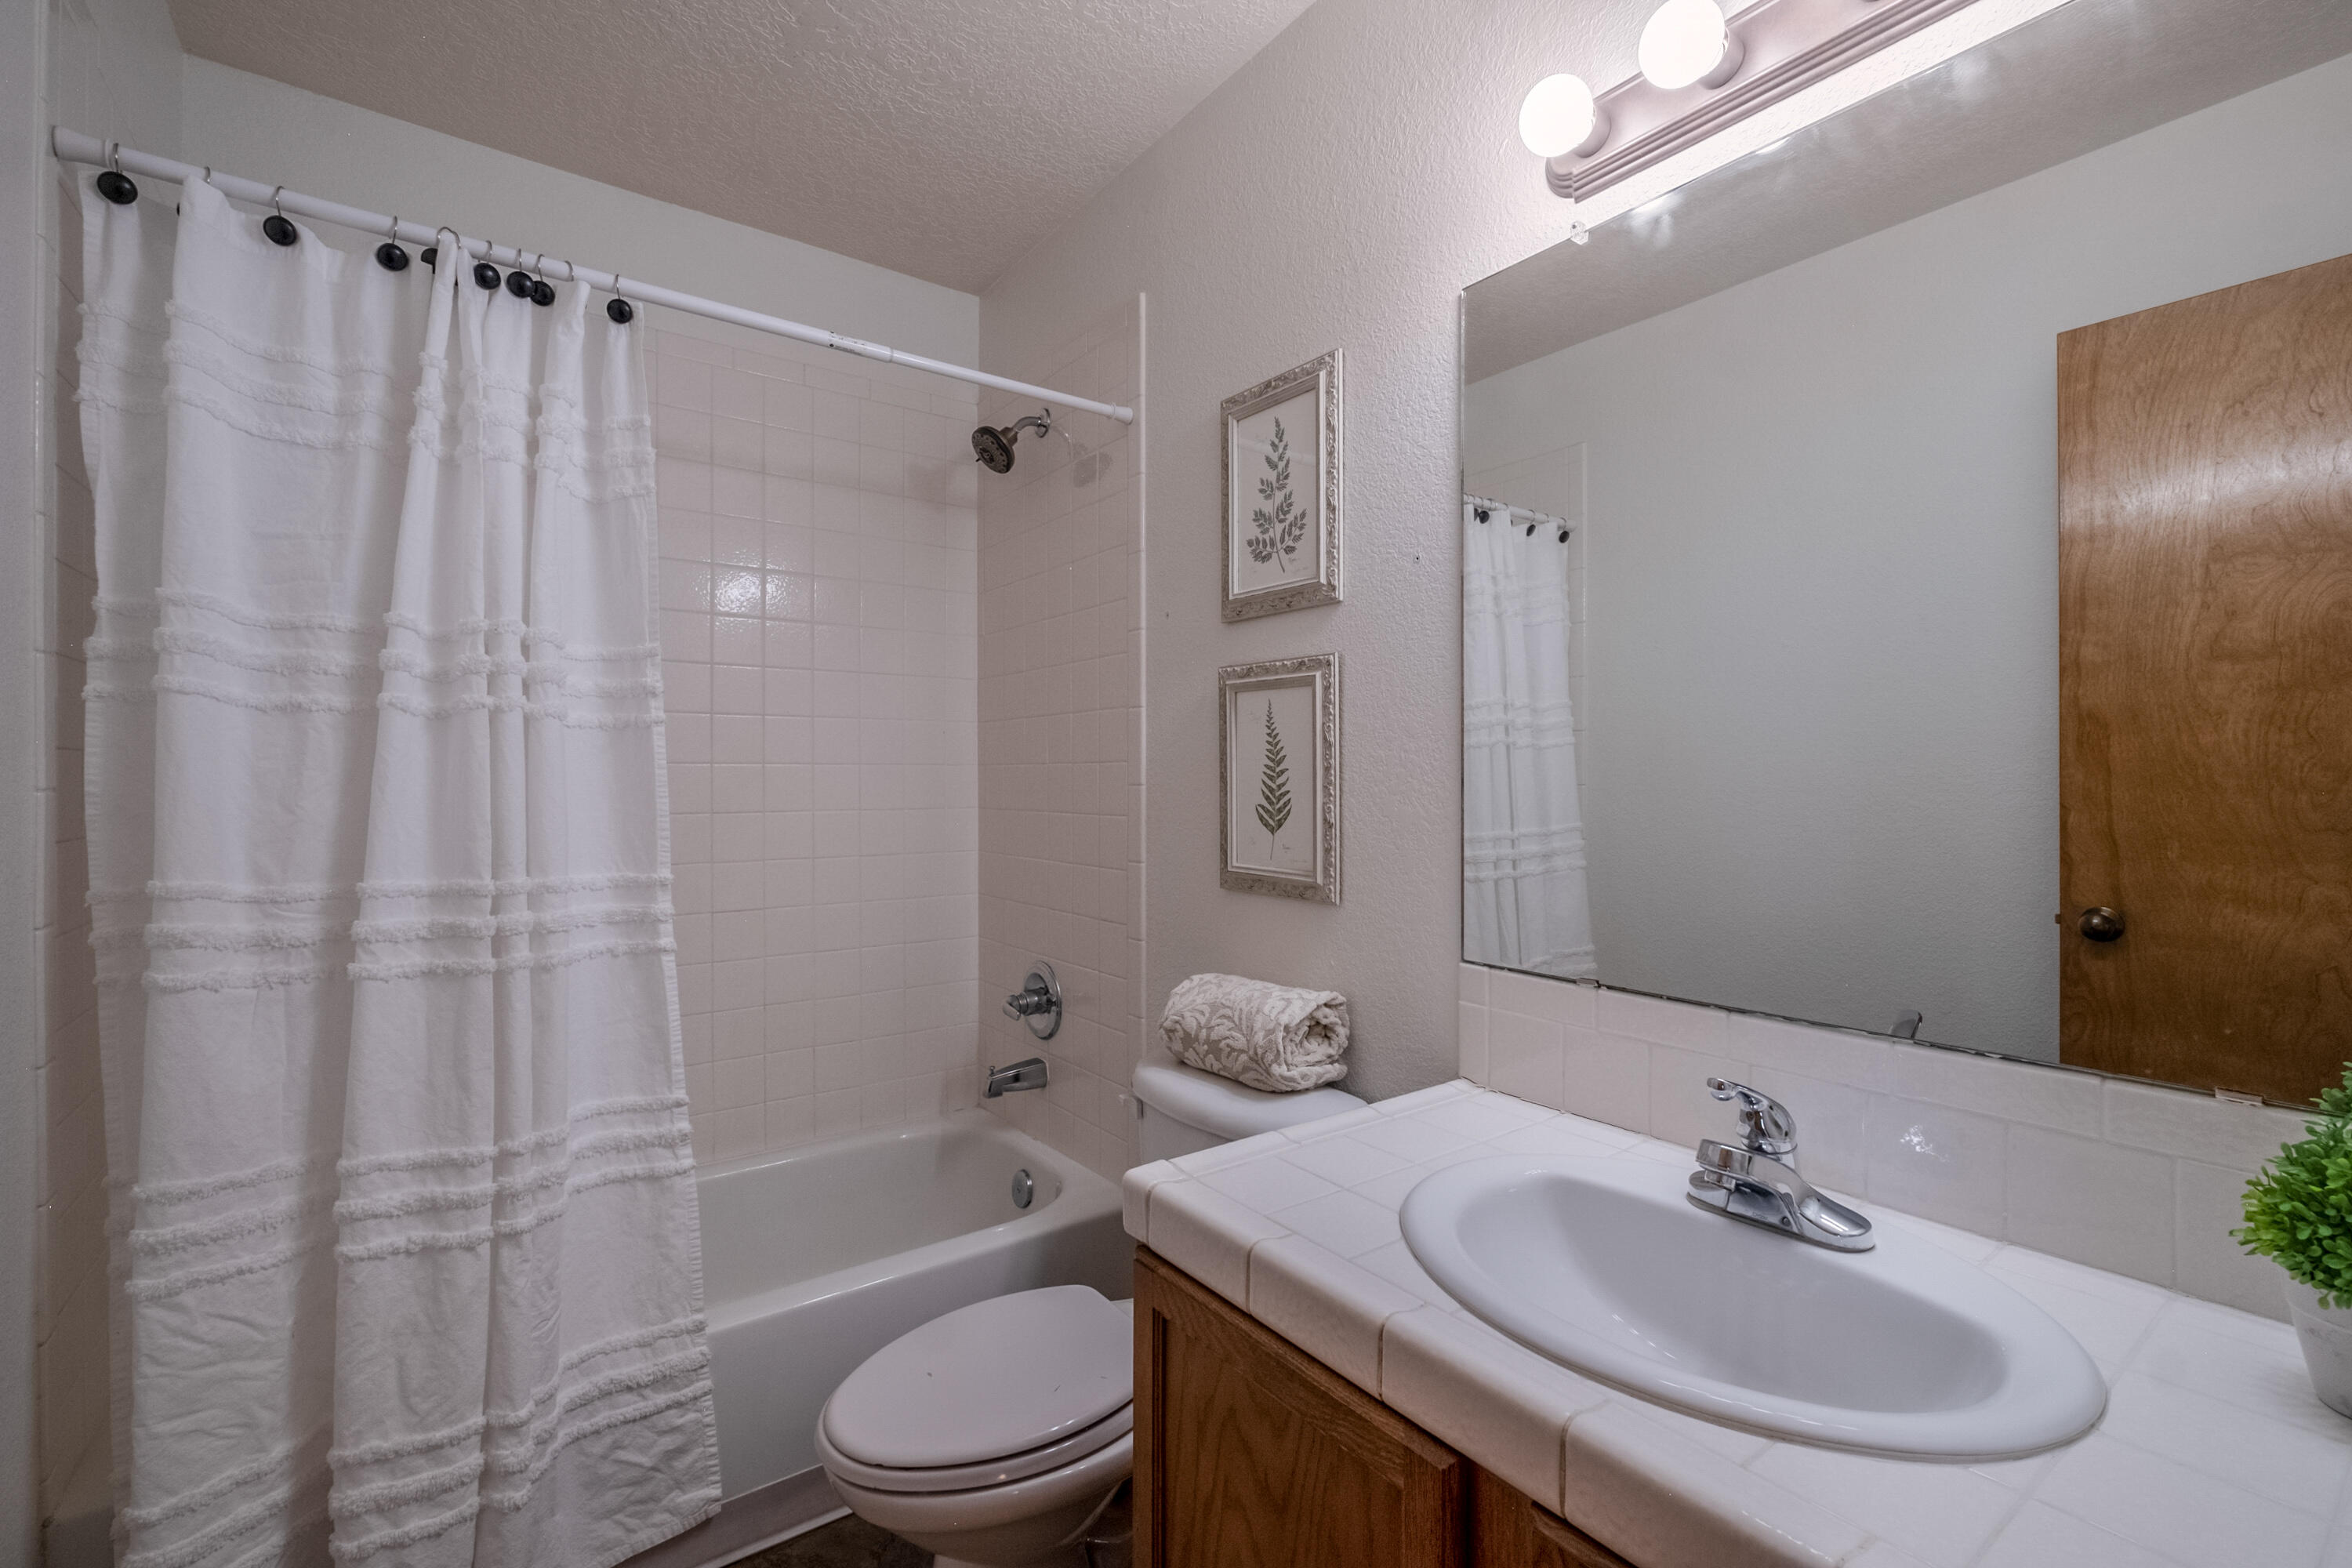 12120 Dan Patch Road SE, Albuquerque, New Mexico 87123, 3 Bedrooms Bedrooms, ,3 BathroomsBathrooms,Residential,For Sale,12120 Dan Patch Road SE,1055603